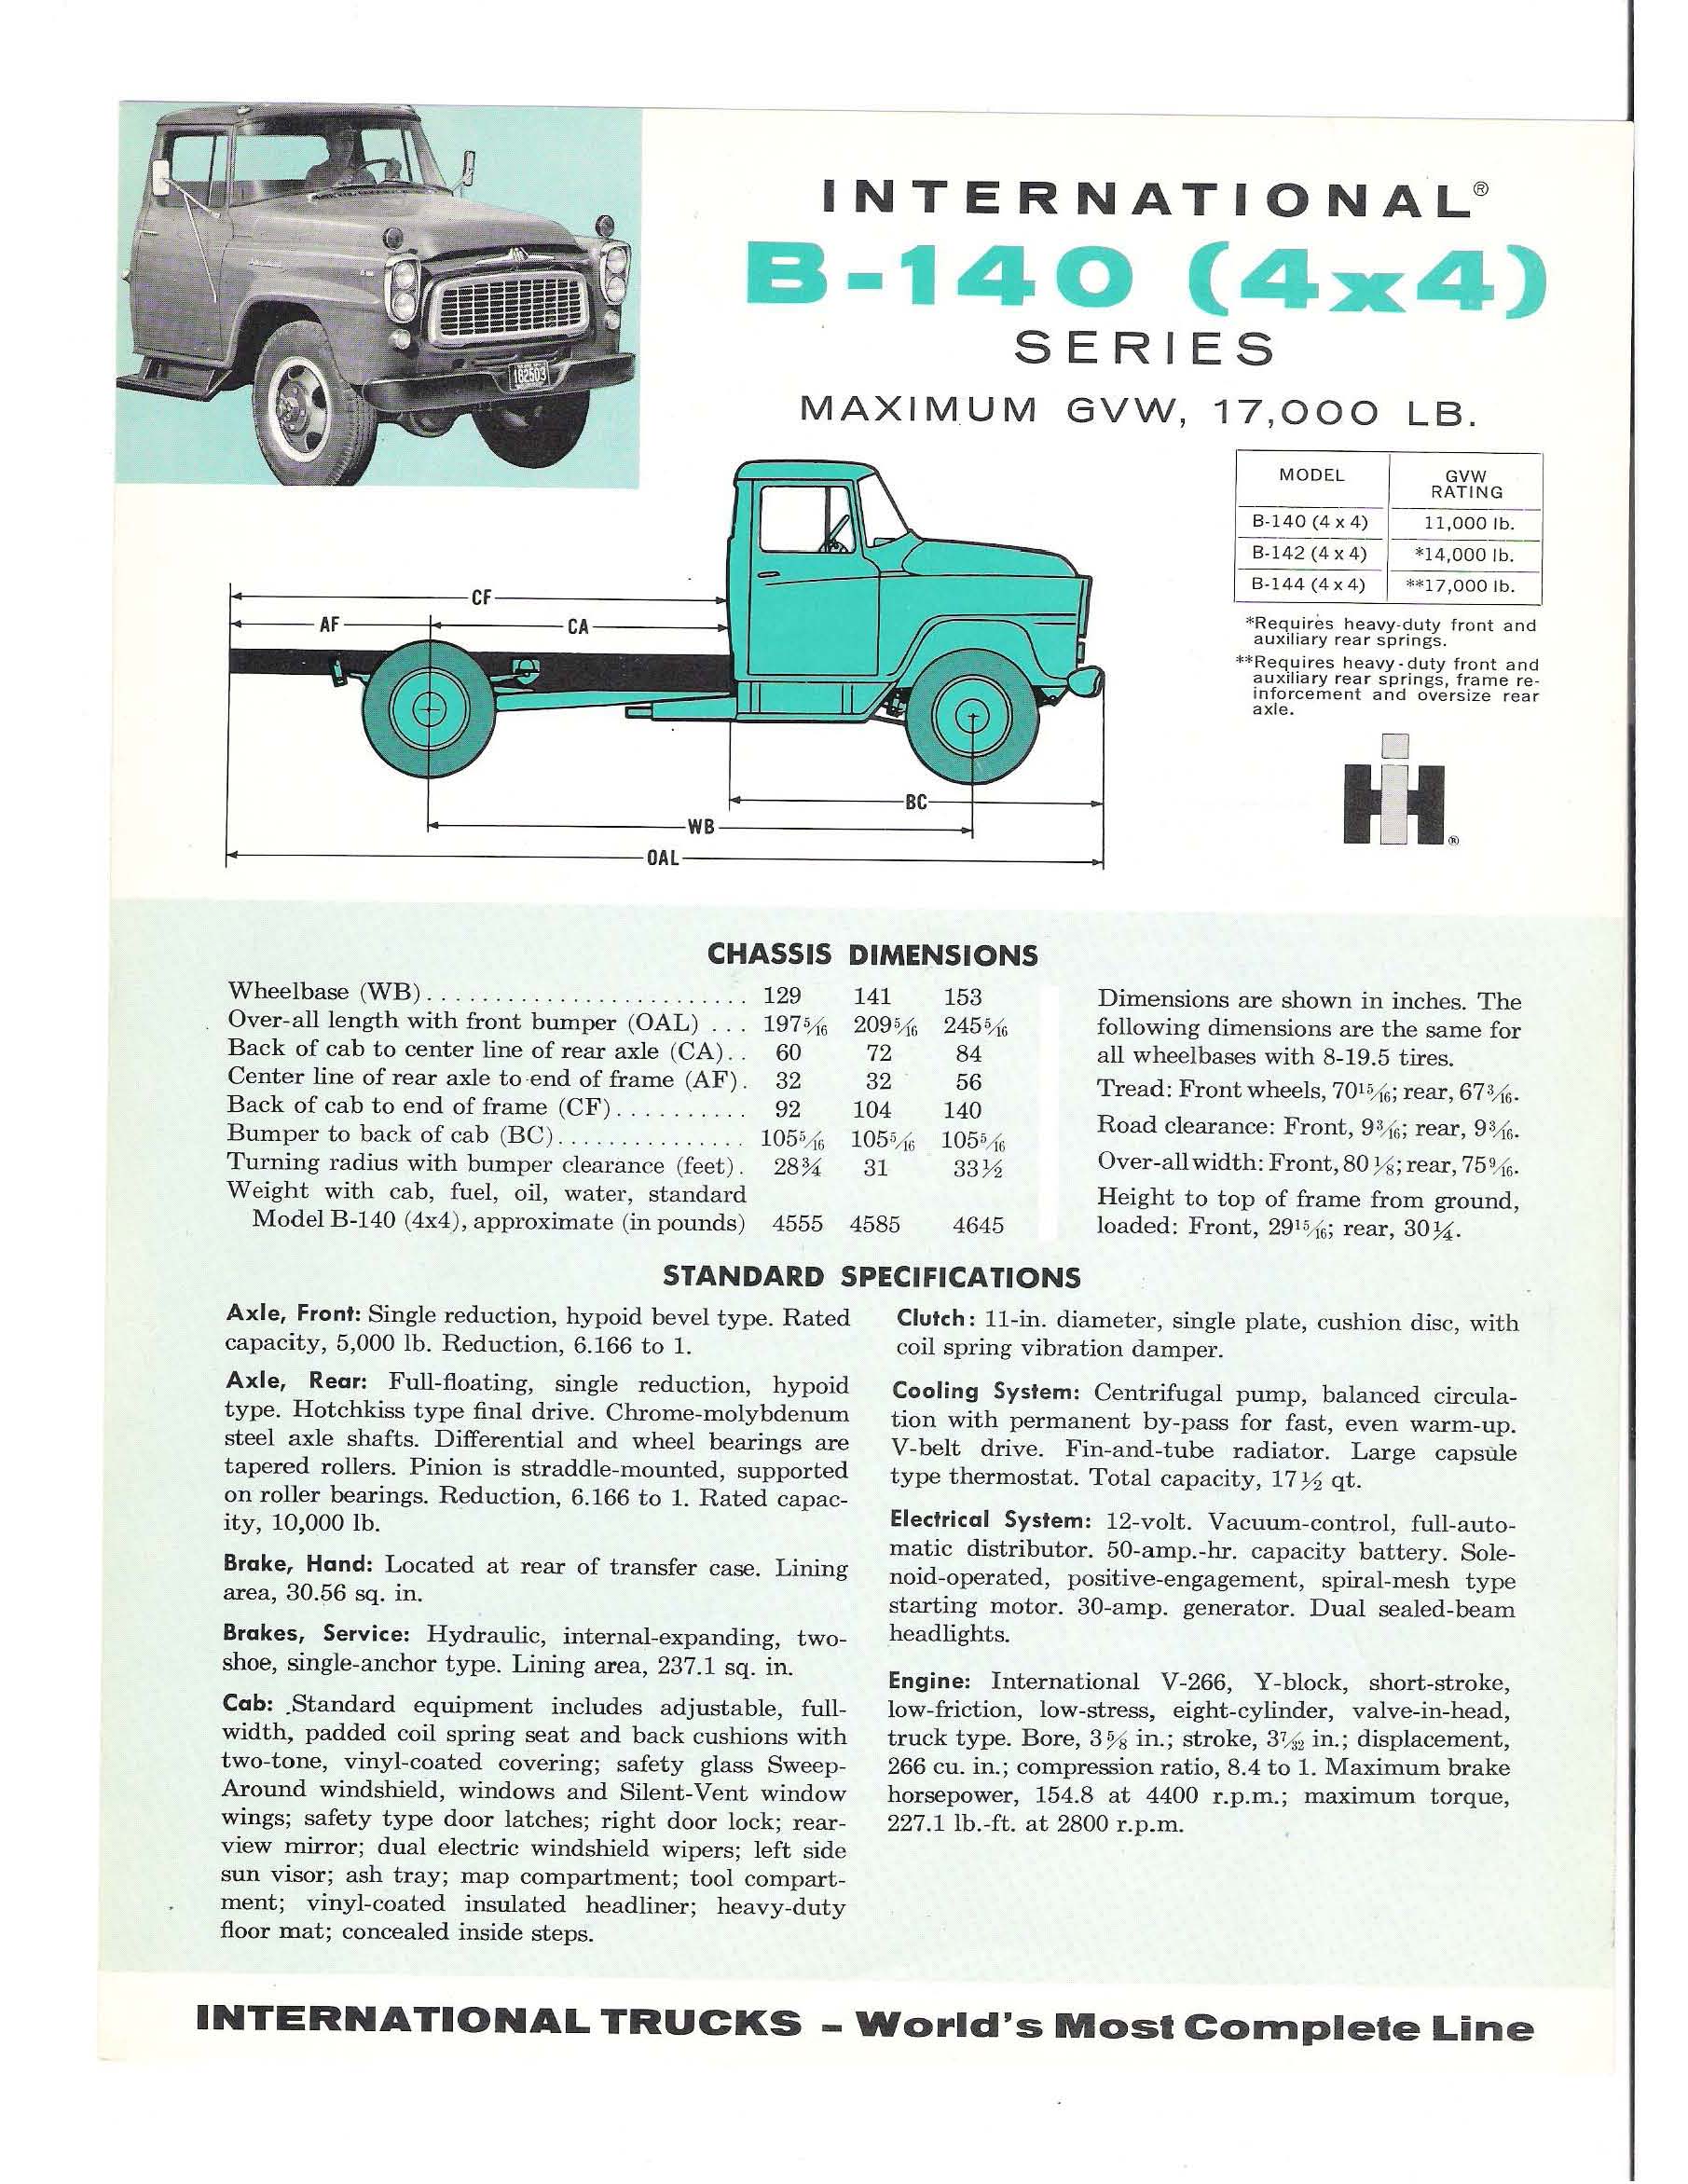 1959_International_B-140_4x4_Series-01